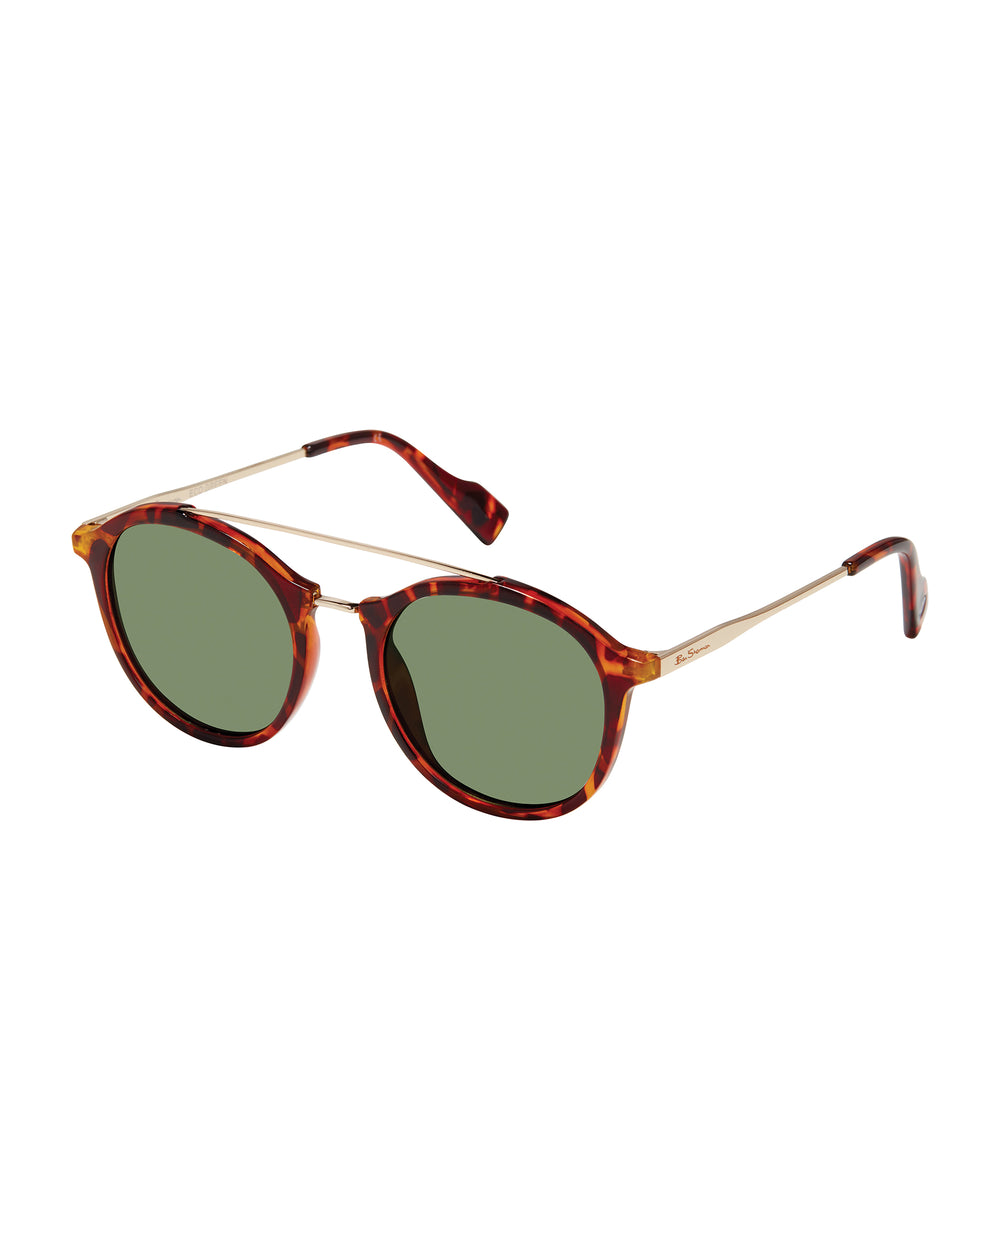 James Polarized Eco-Green Sunglasses - Tortoise